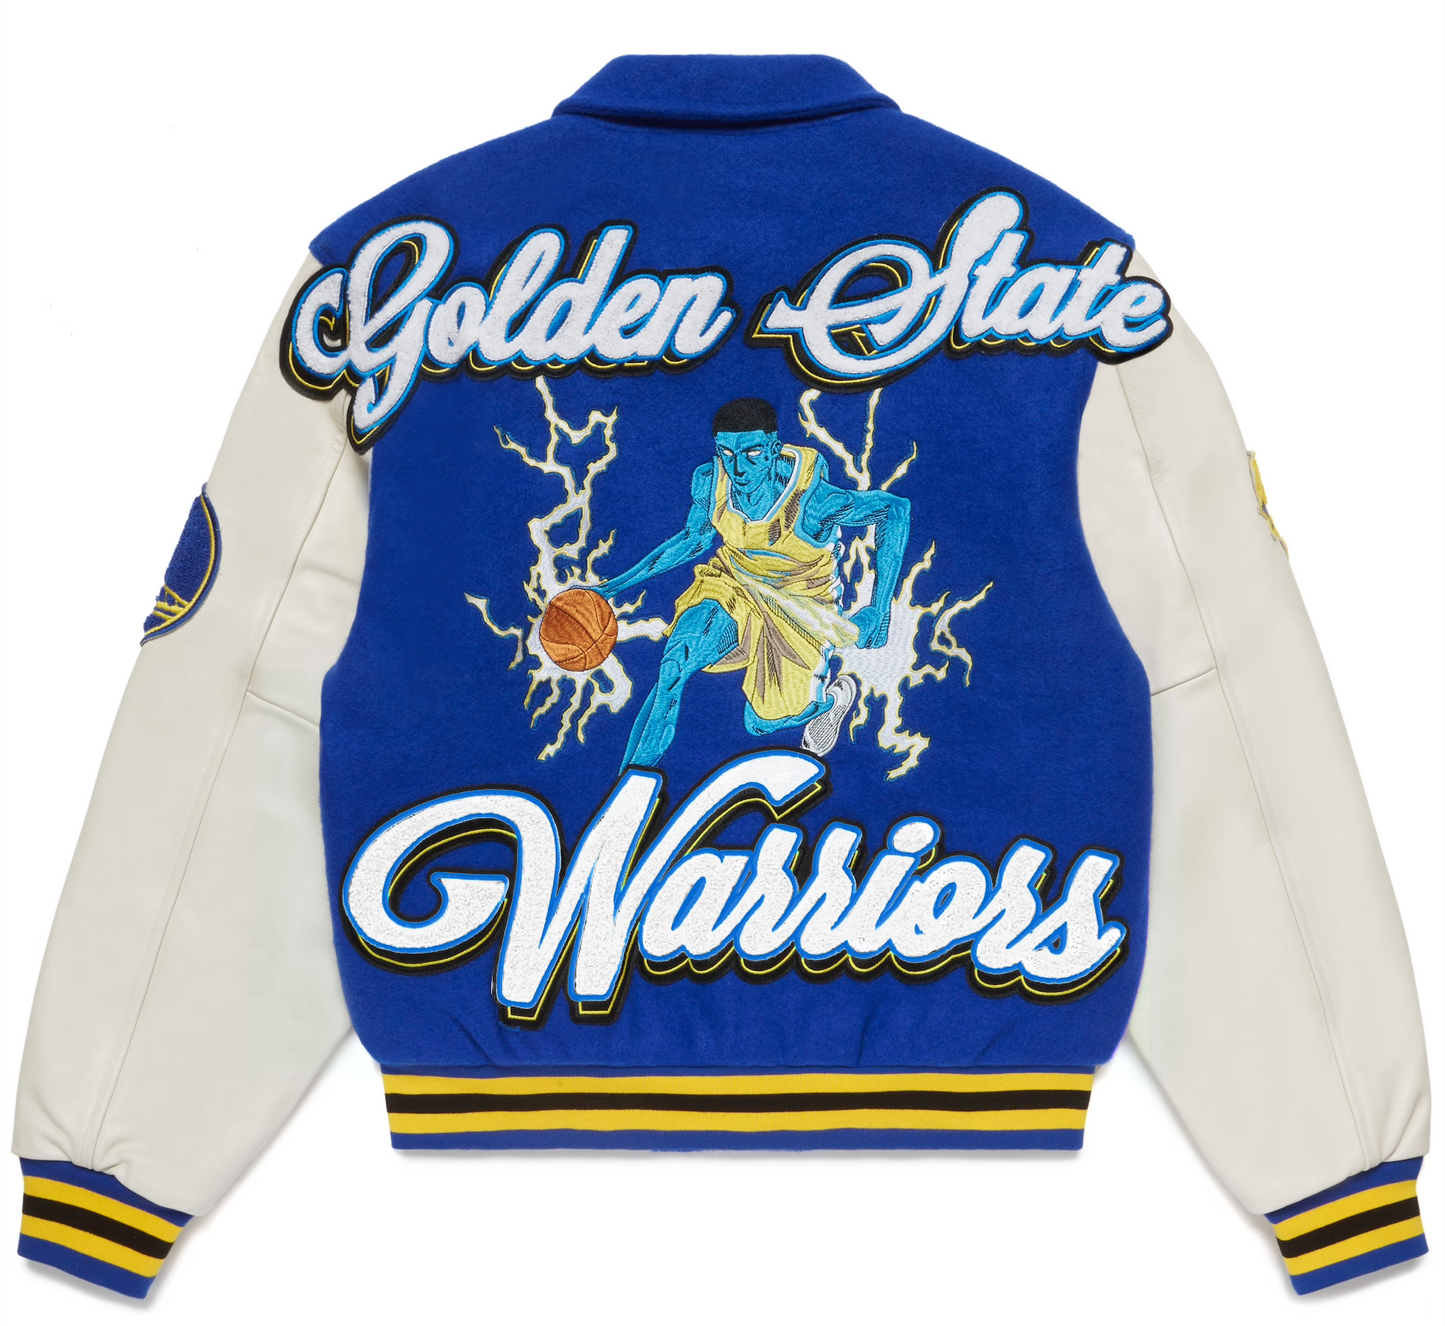 NBA GOLDEN STATE WARRIORS VARSITY JACKET (BLUE)